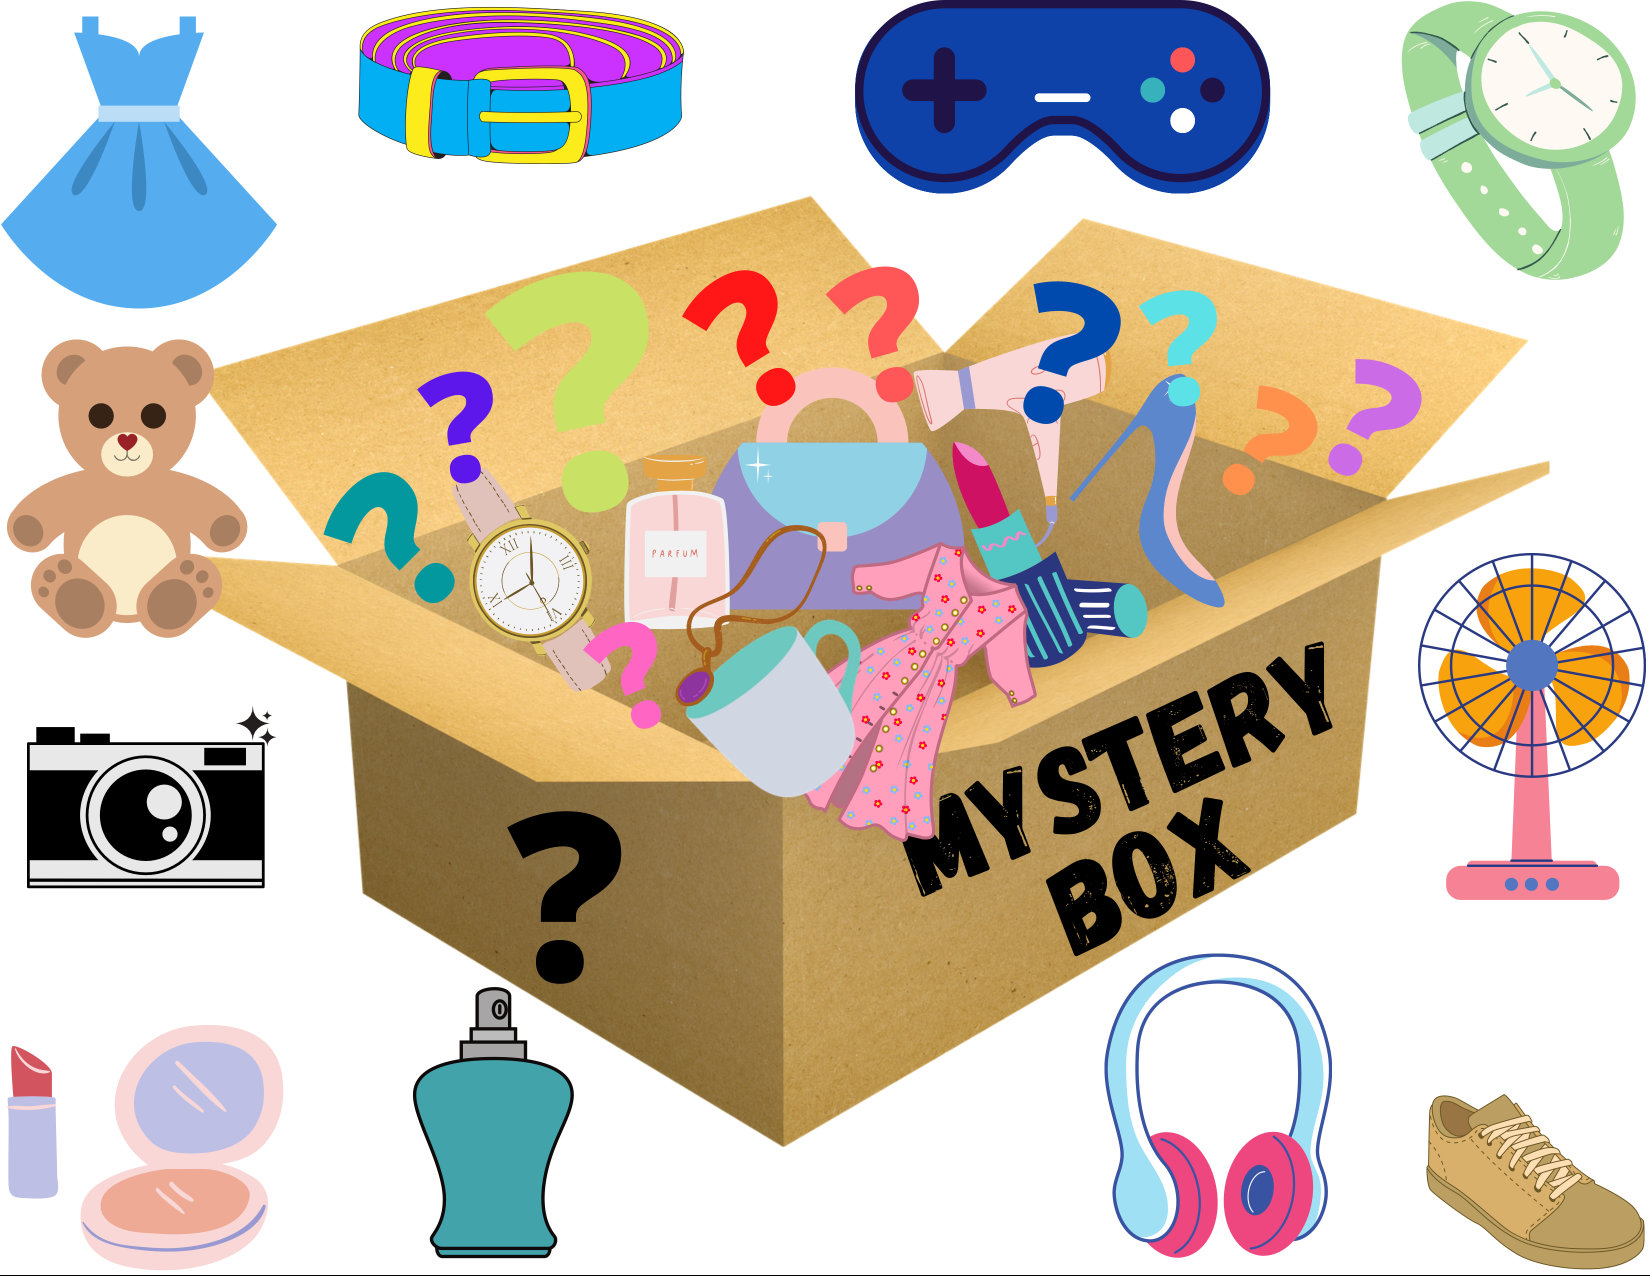 Mystery Box Electronics 